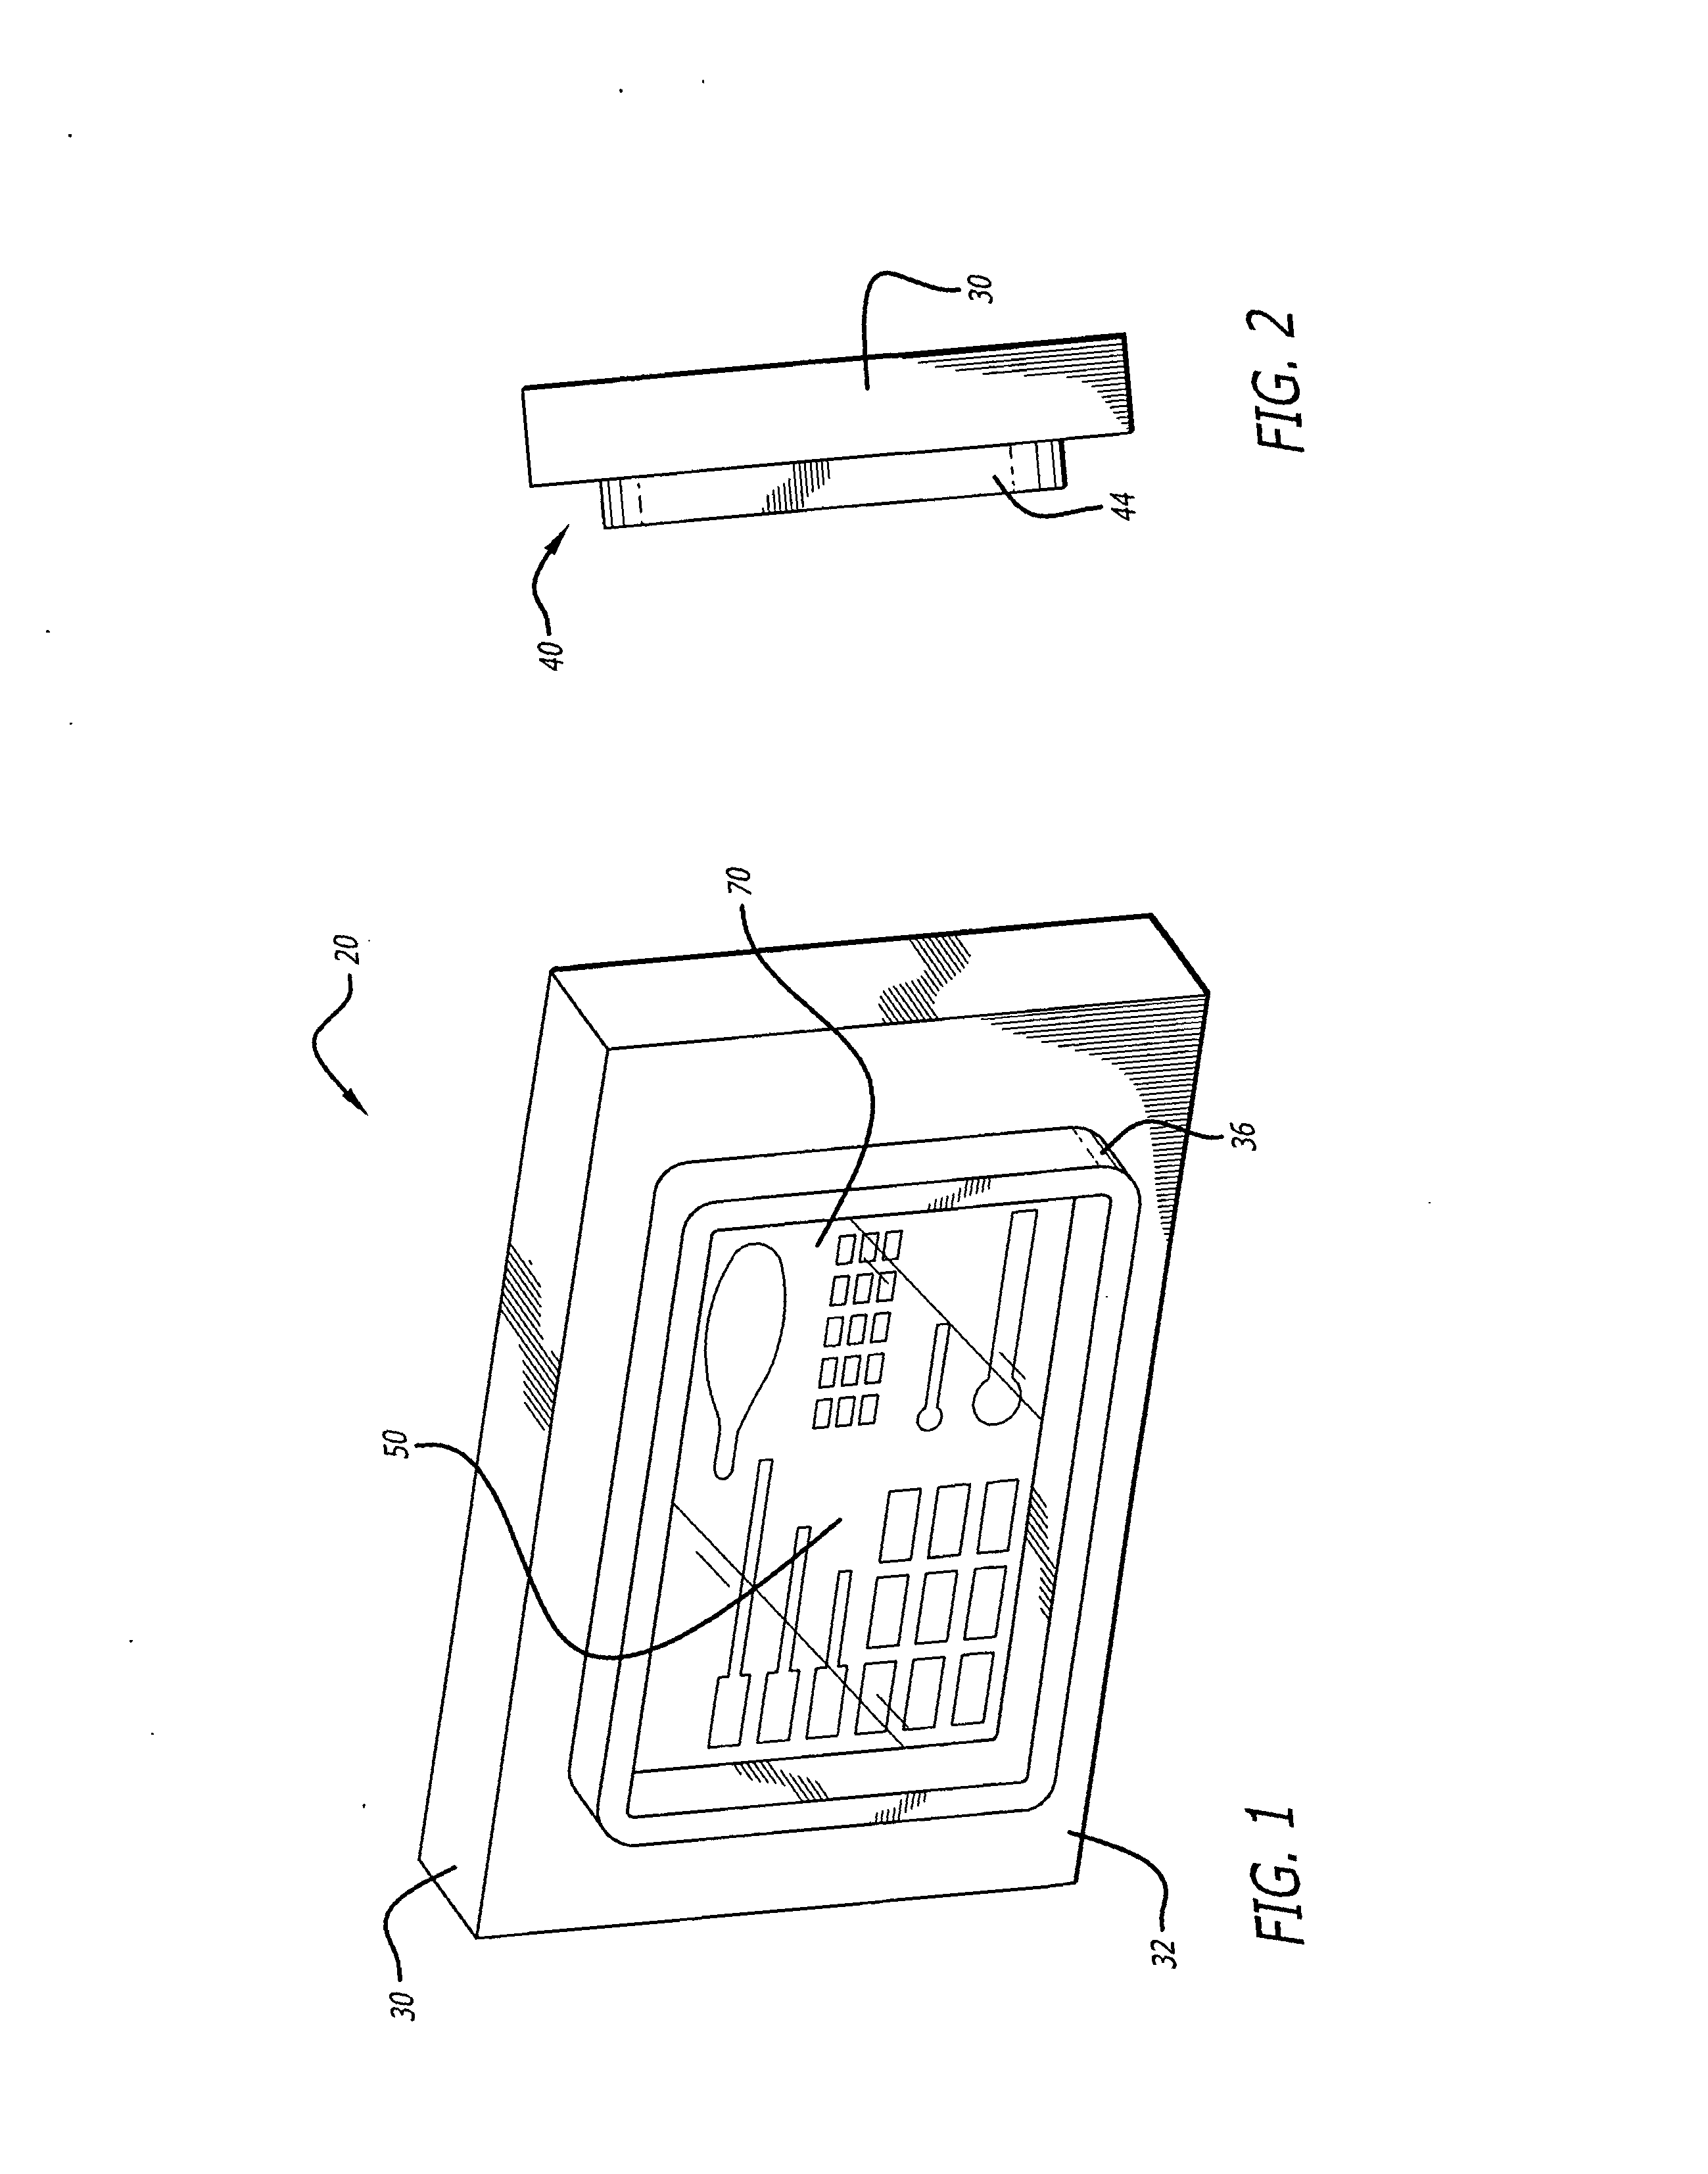 Packaging apparatus